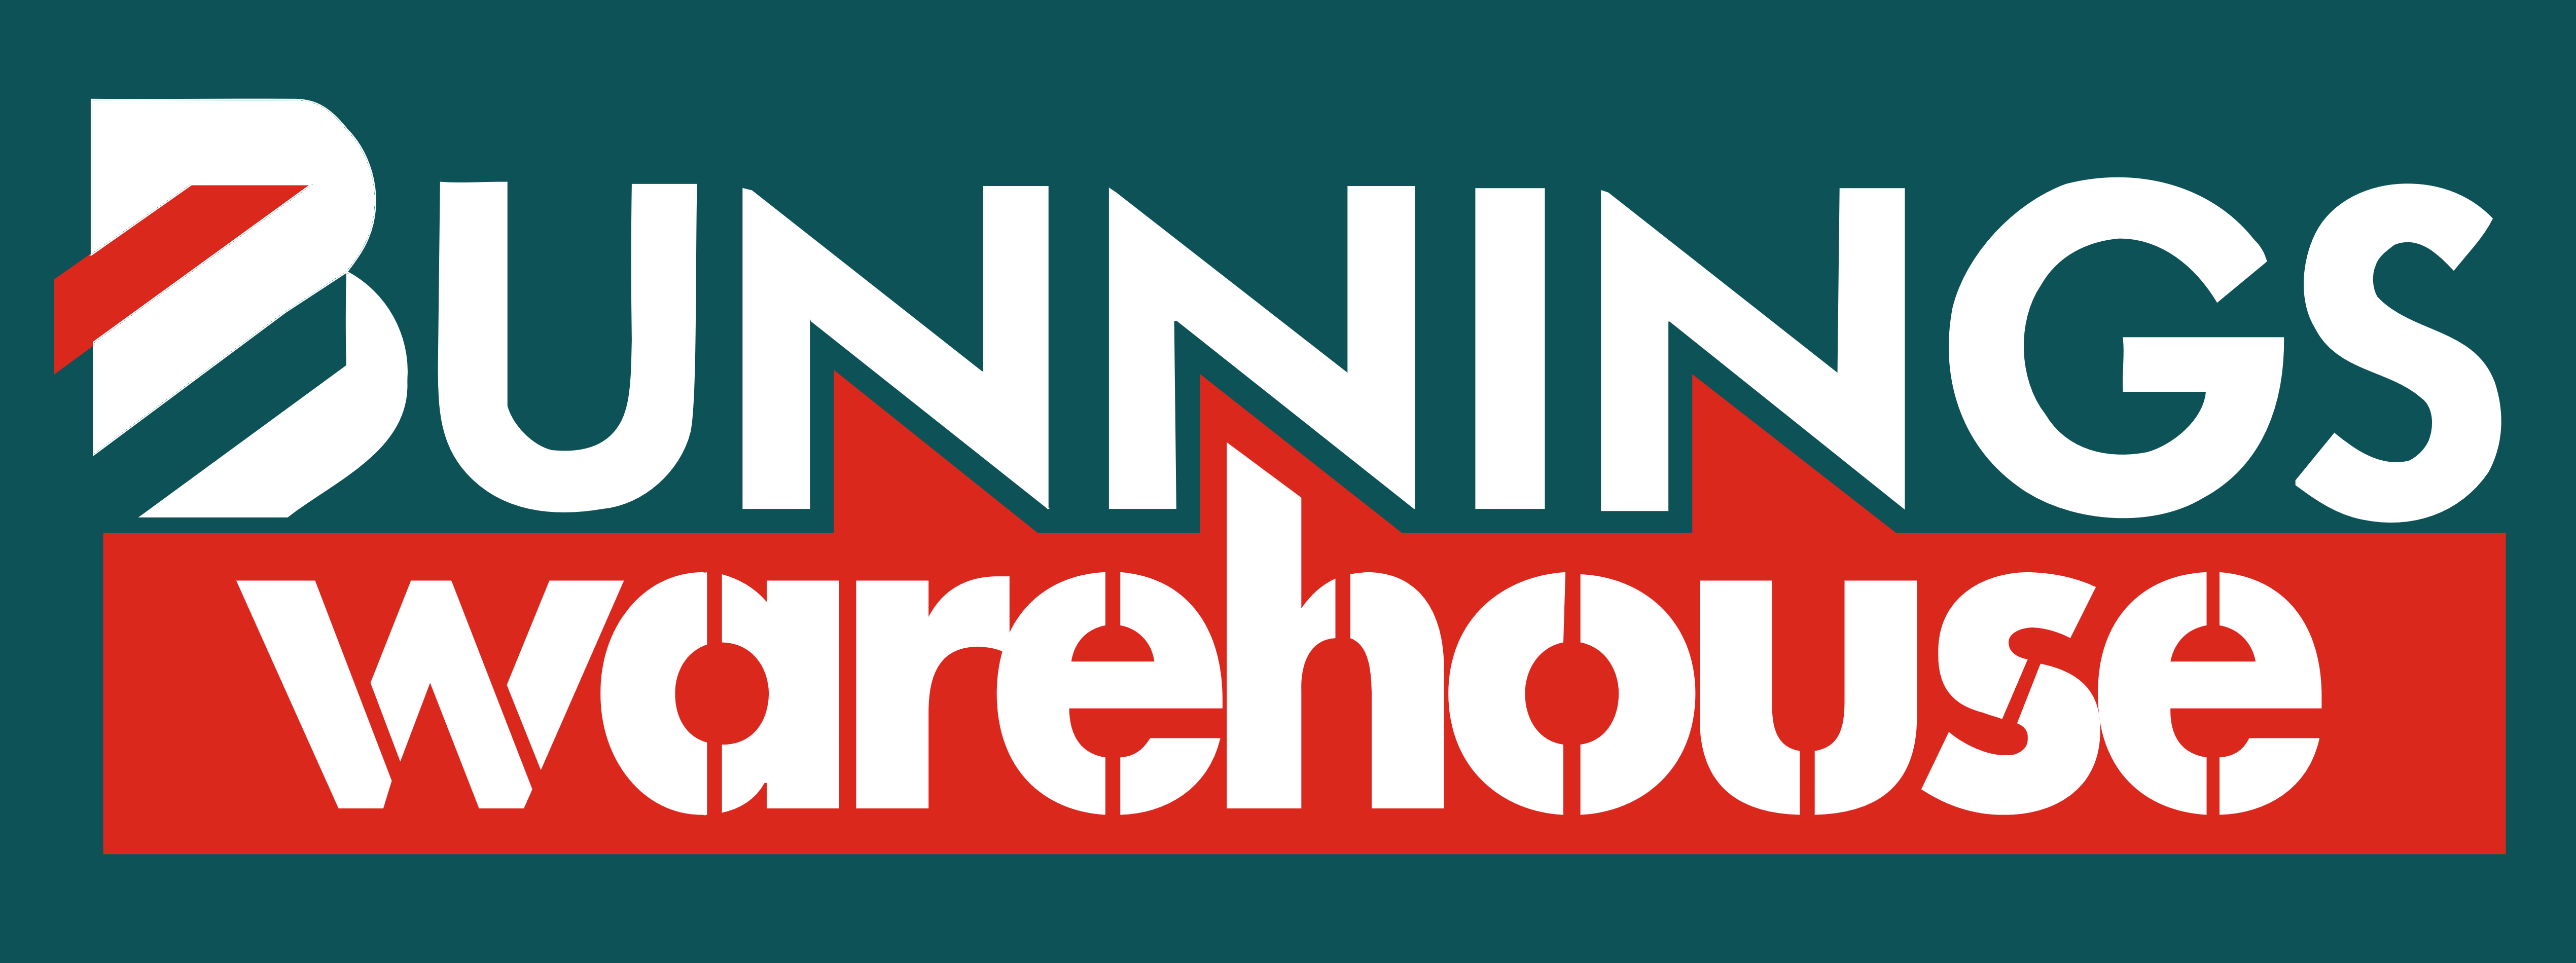 Bunnings-logo